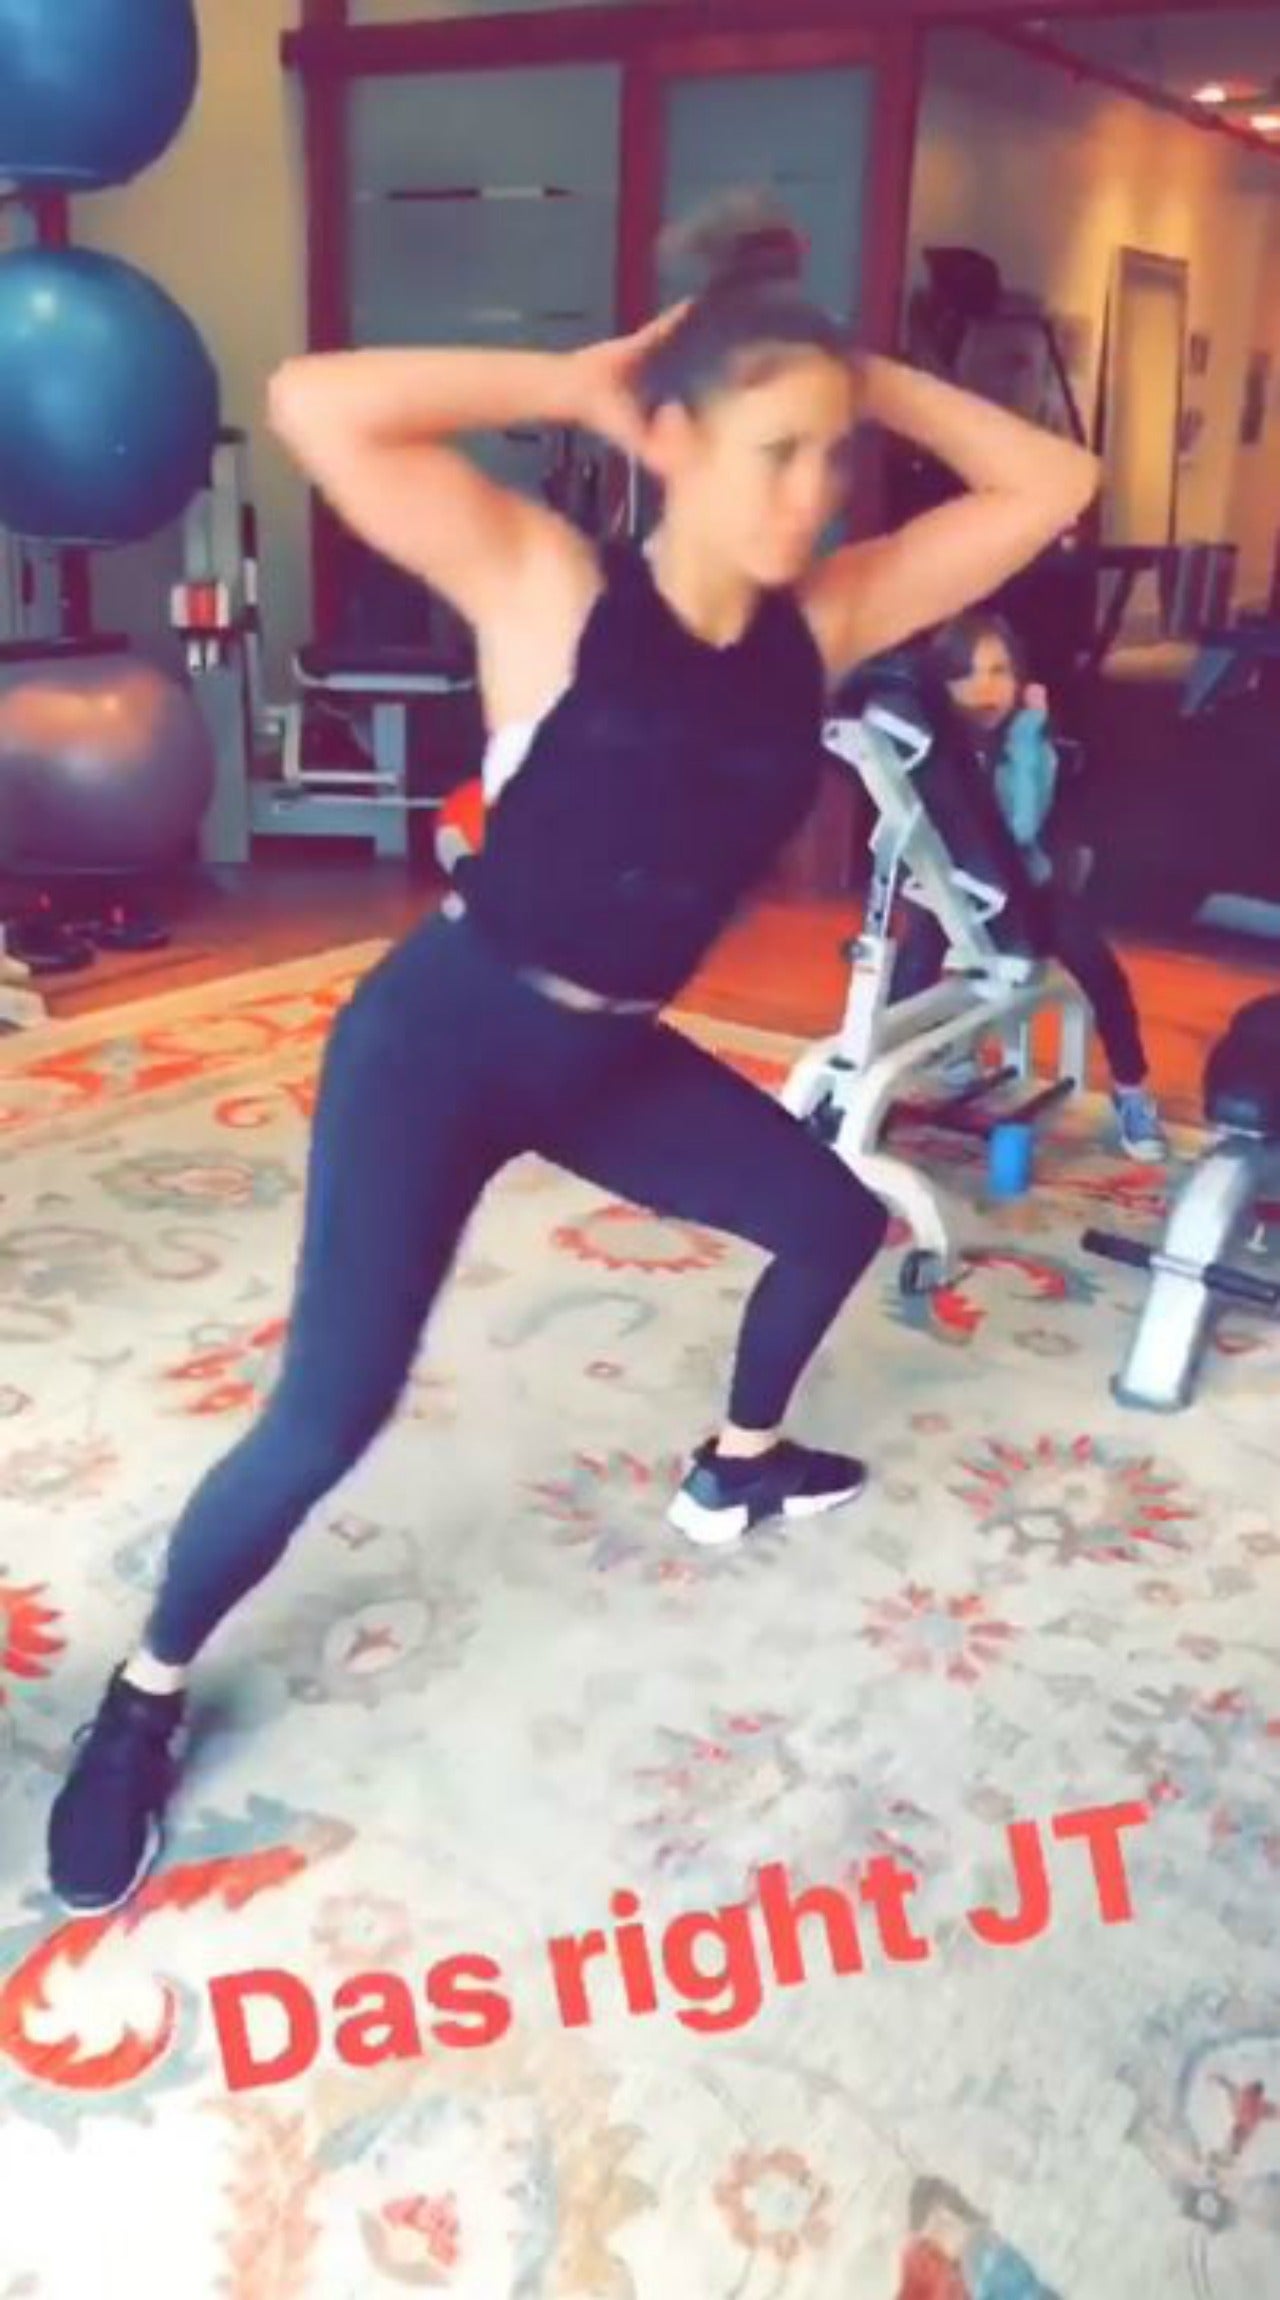 Jennifer Lopez Shows Off Her Workout Routine on Instagram | Entertainment Tonight1280 x 2300